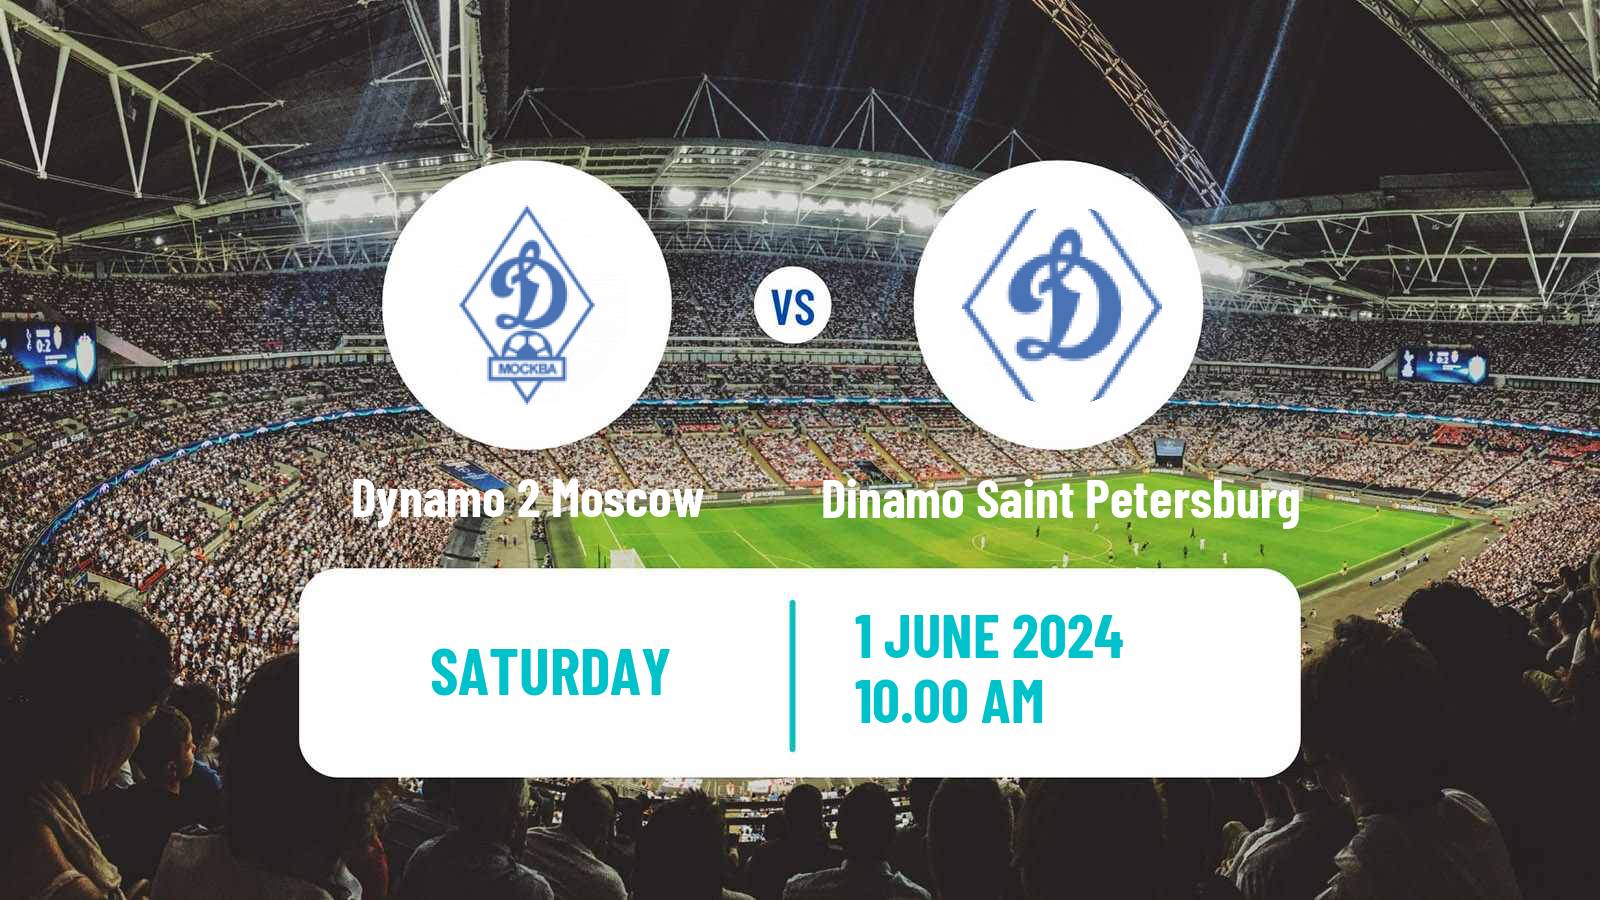 Soccer FNL 2 Division B Group 2 Dynamo 2 Moscow - Dinamo Saint Petersburg